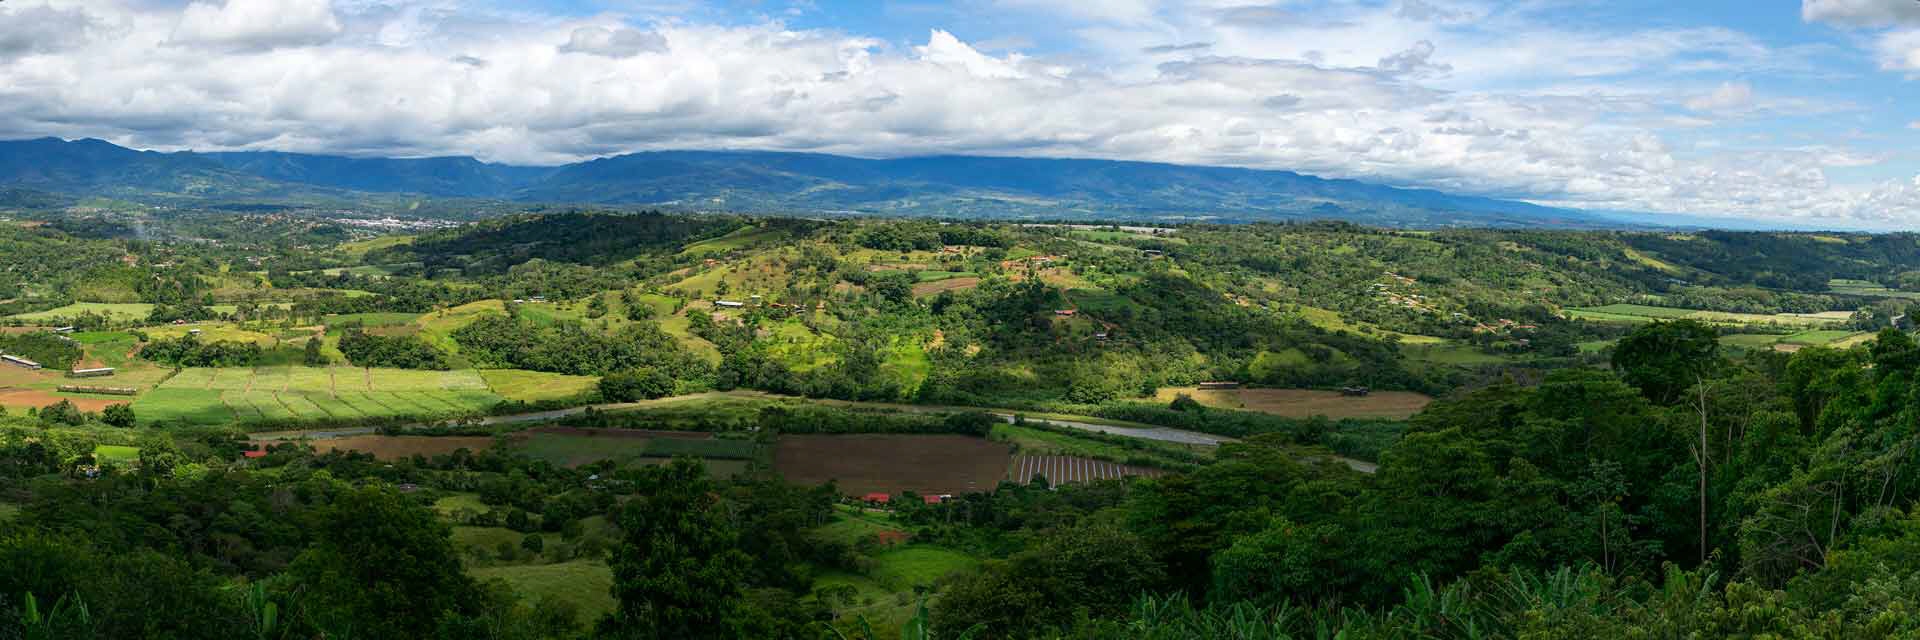 Landschaft bei San Isidro, Costa Rica